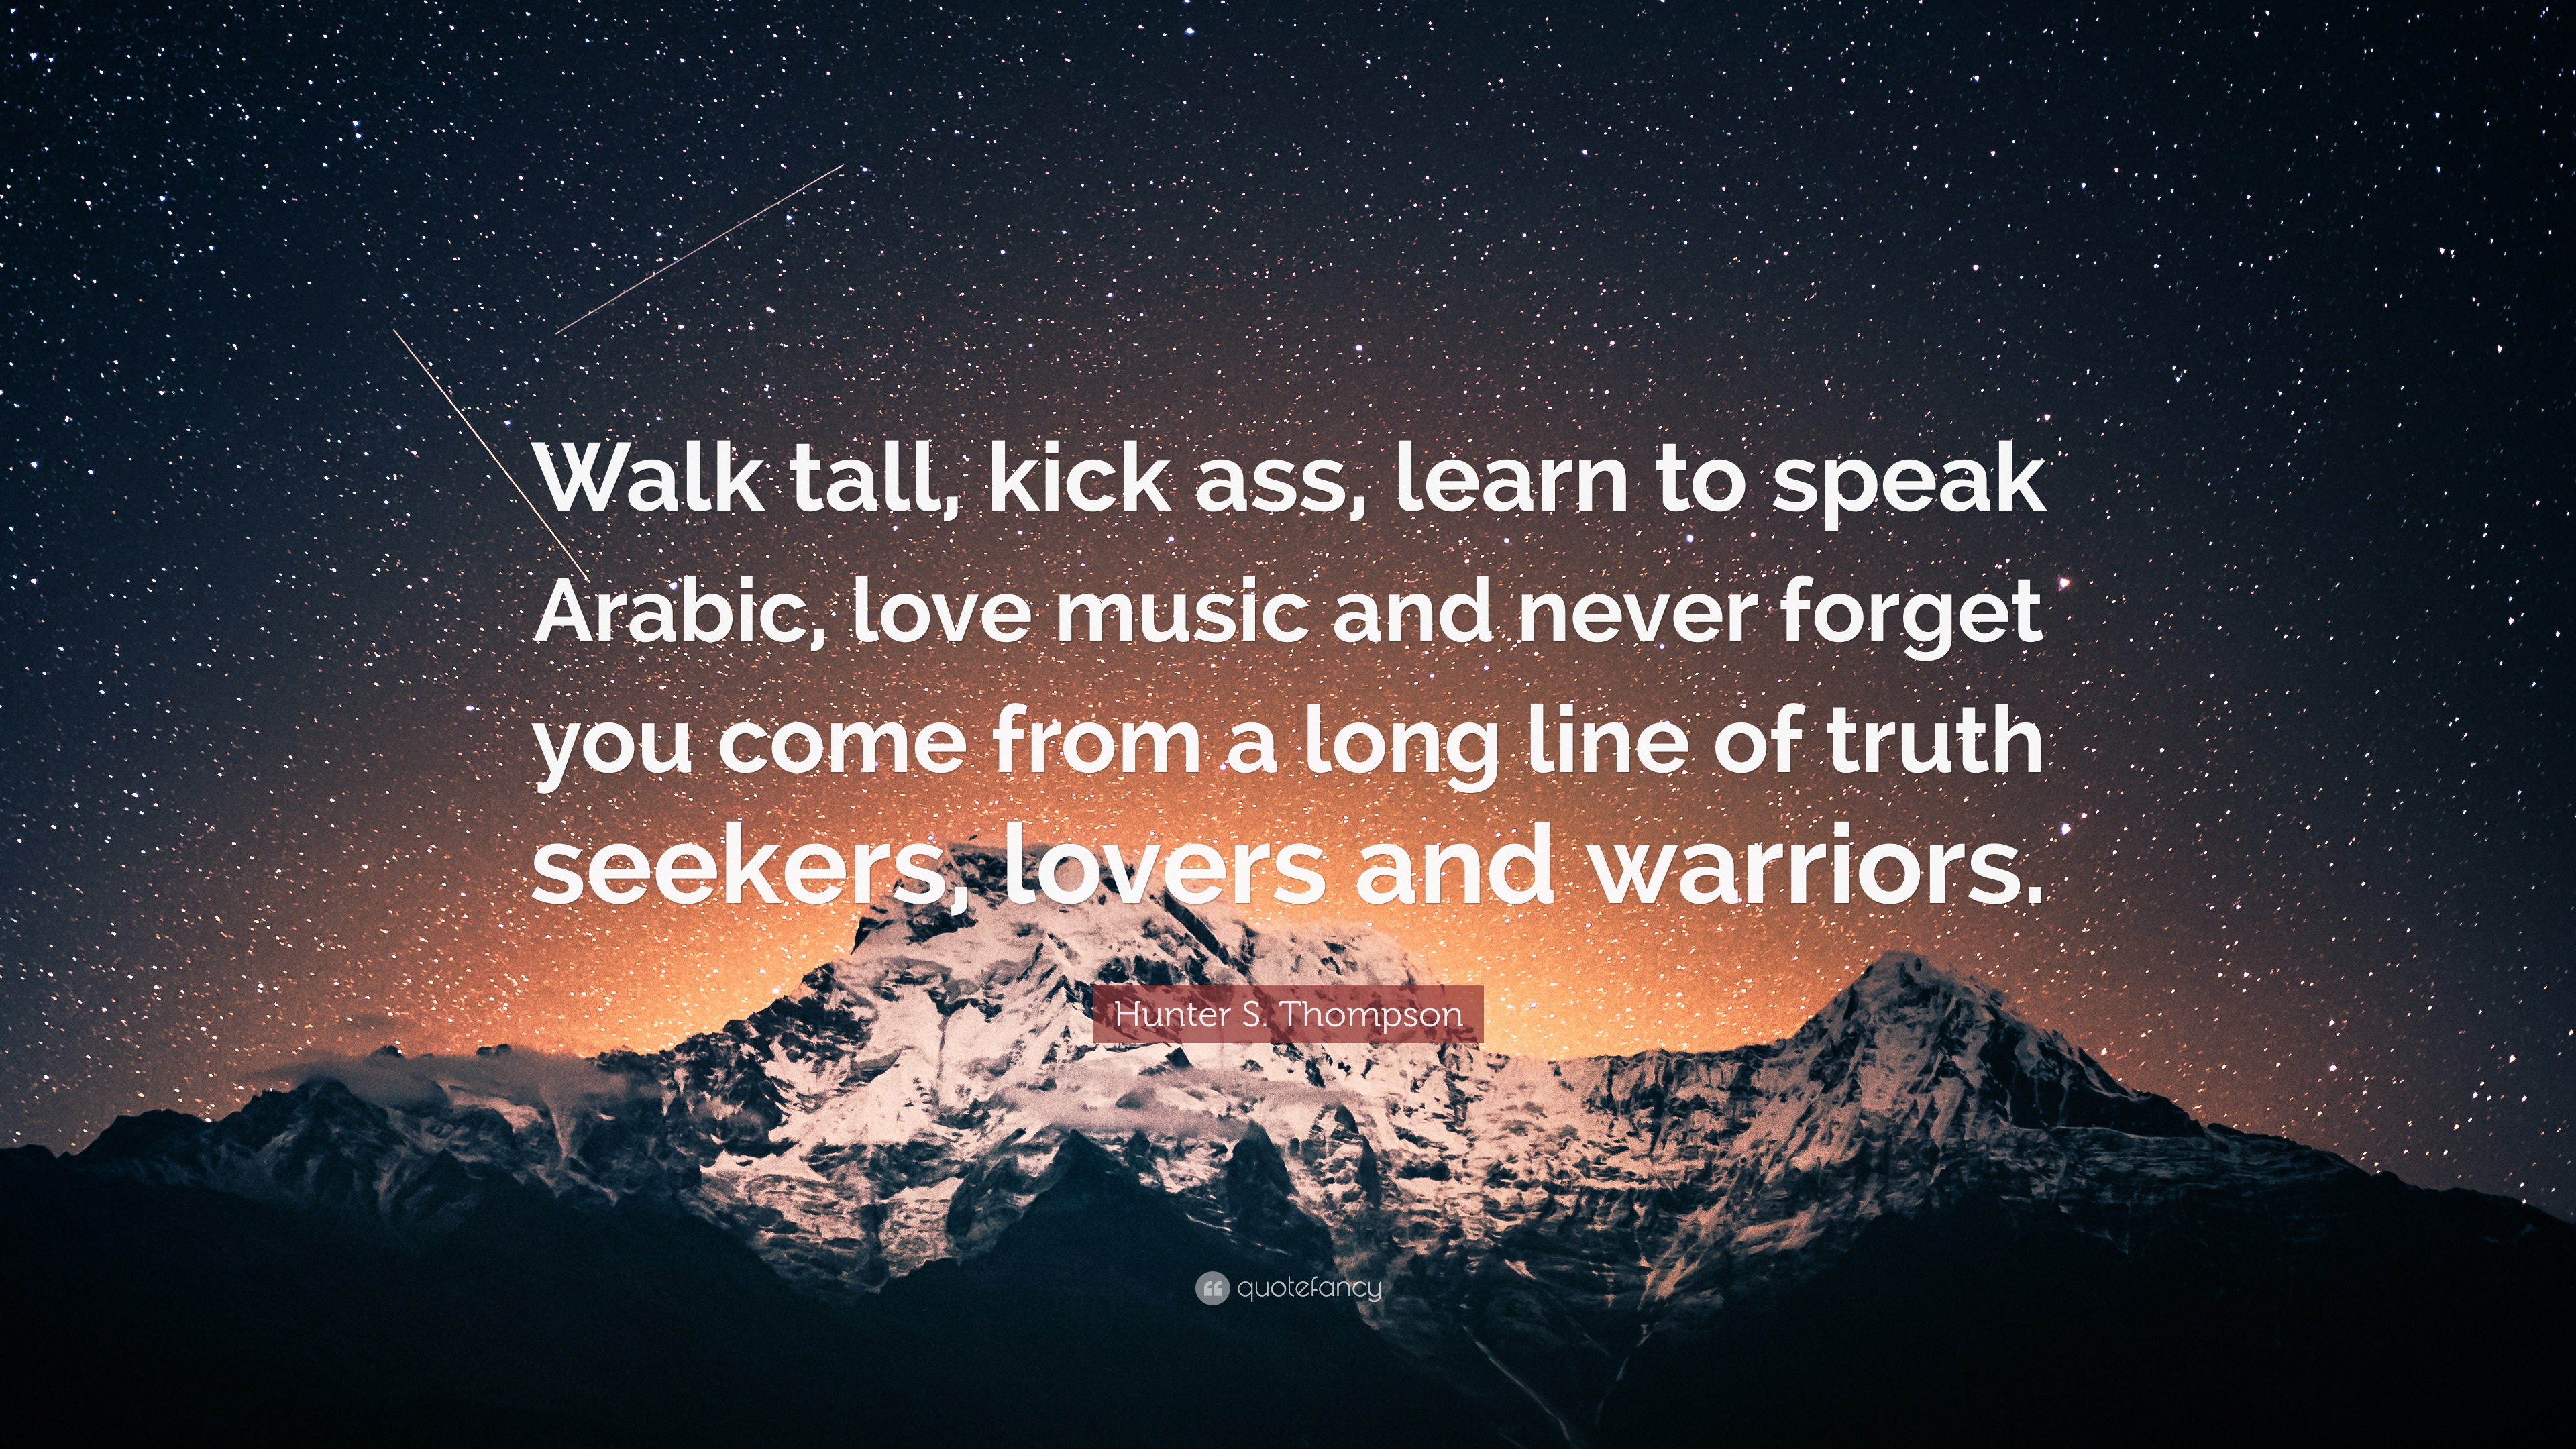 Hunter S Thompson Quote “Walk tall kick ass learn to speak